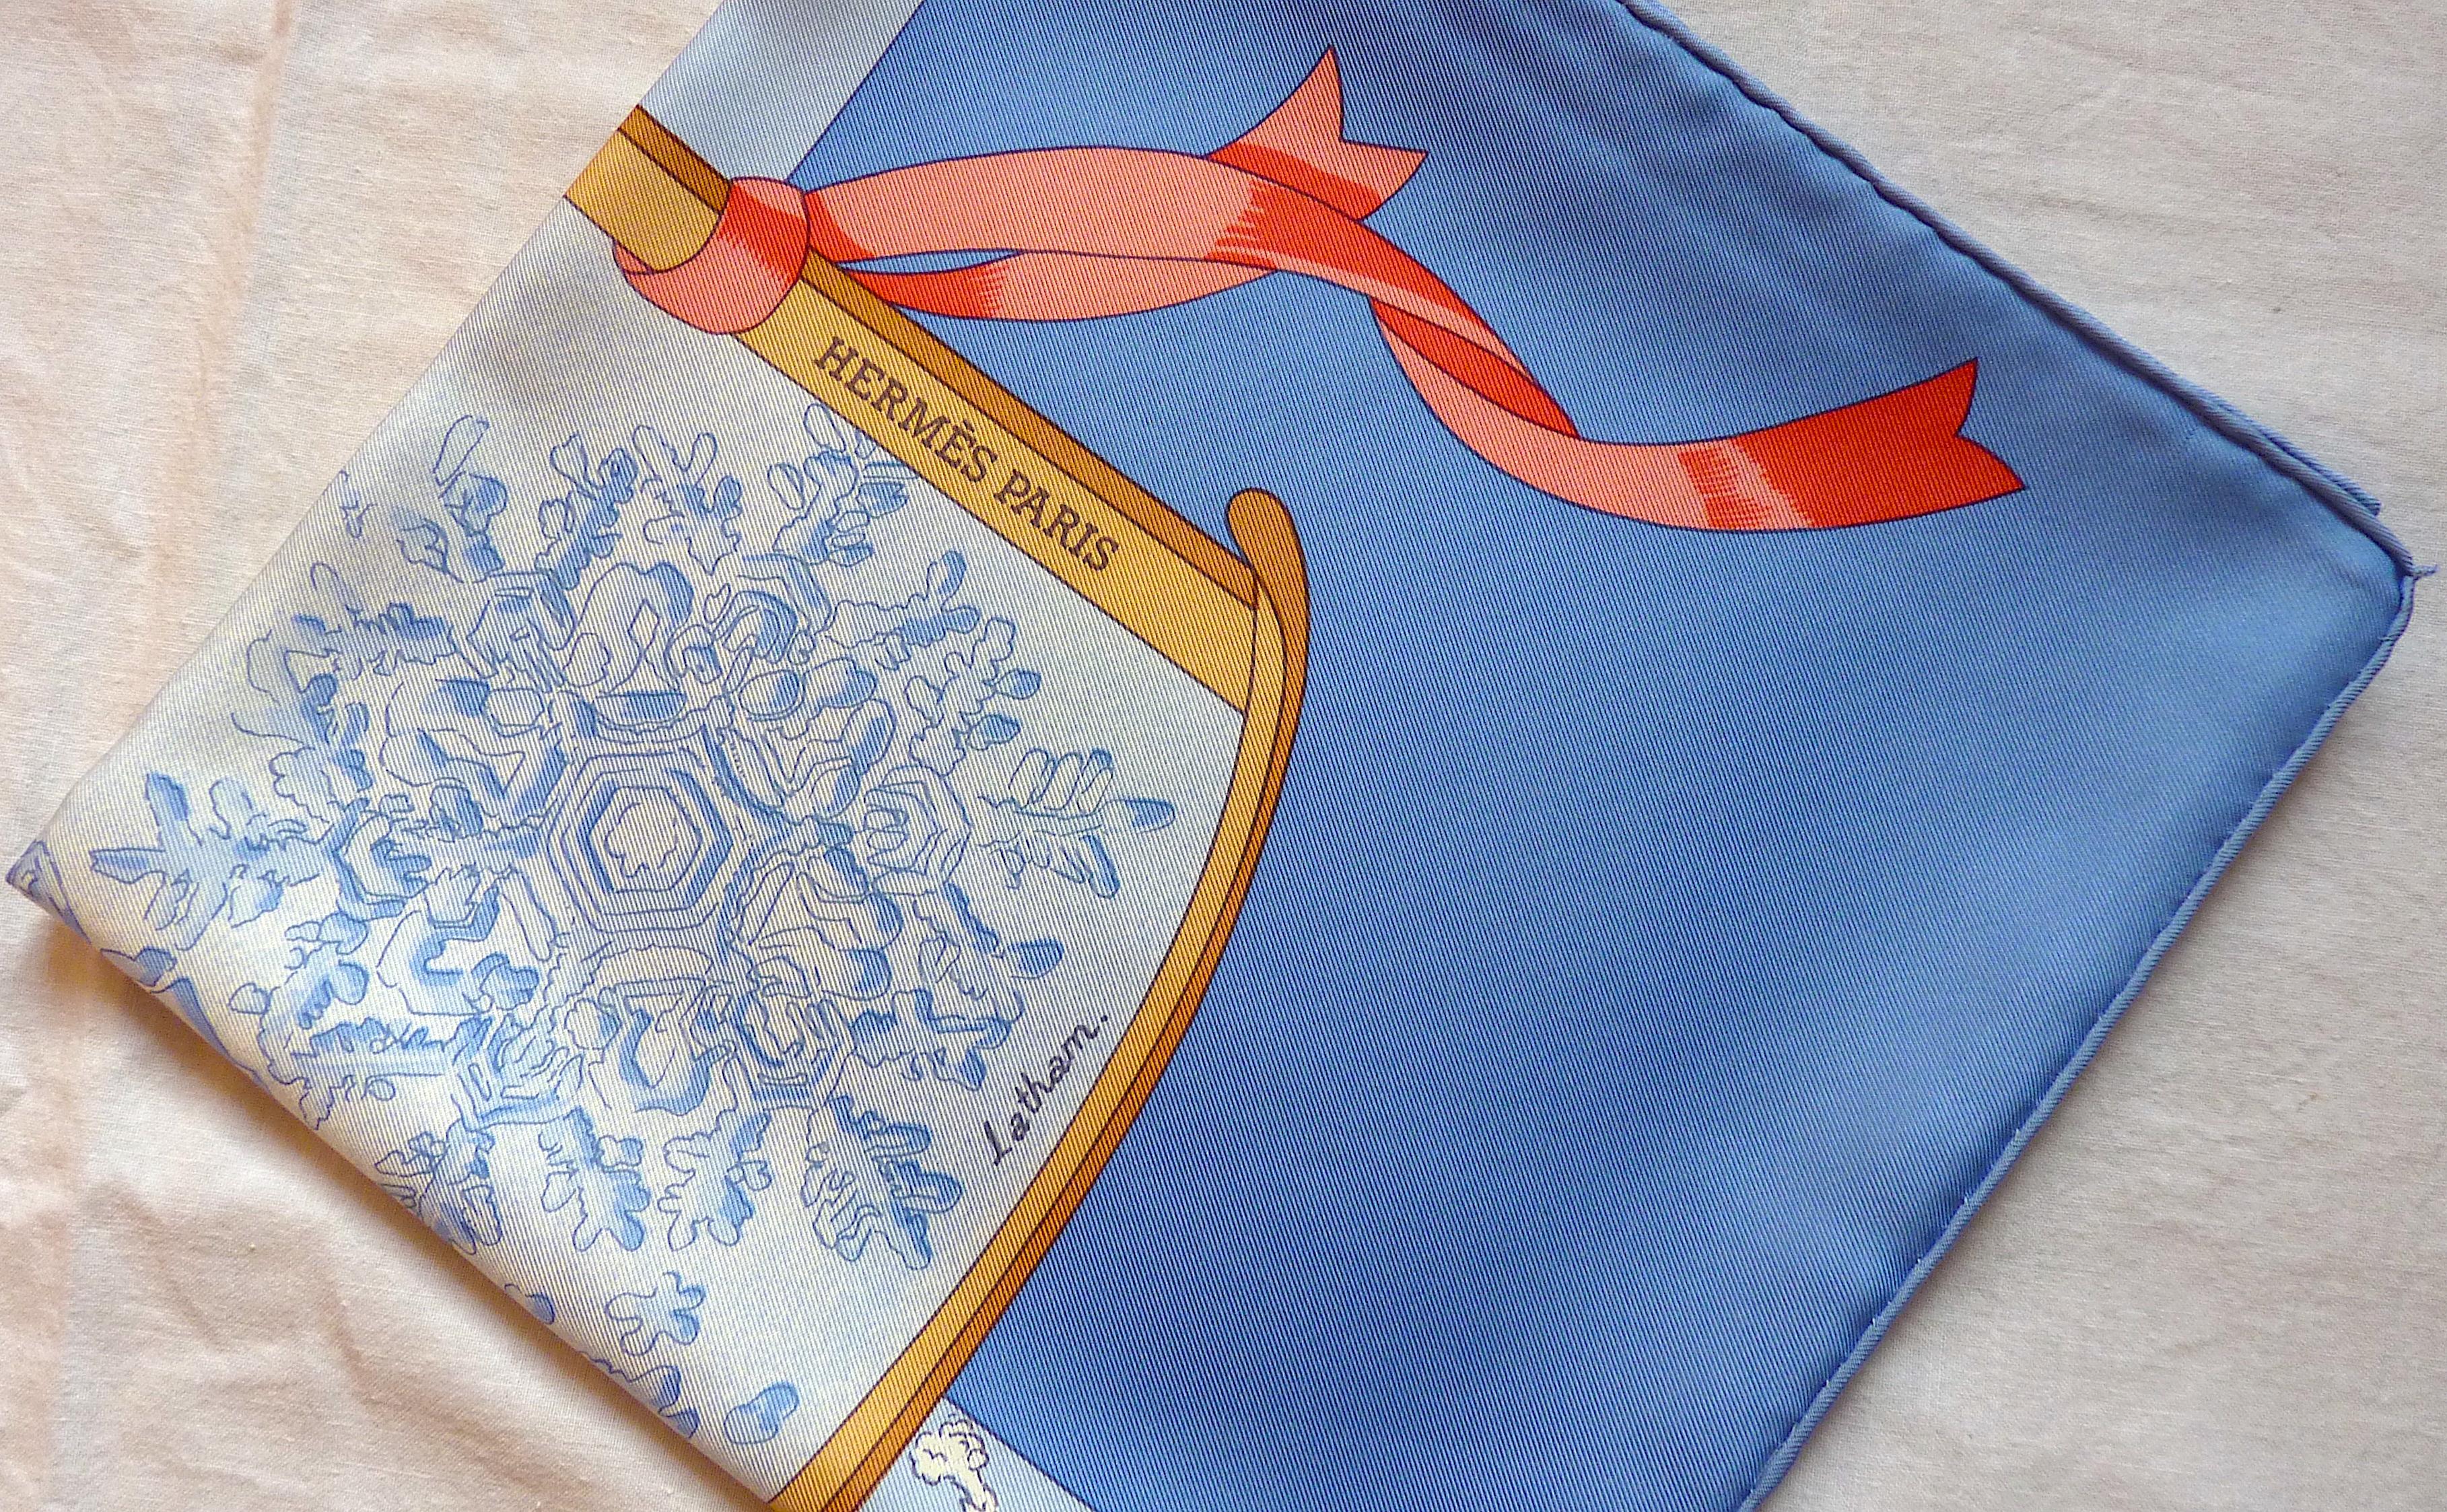 Hermes Silk Scarf Neige d'Antan Rare Special Edition Torino 2006 3